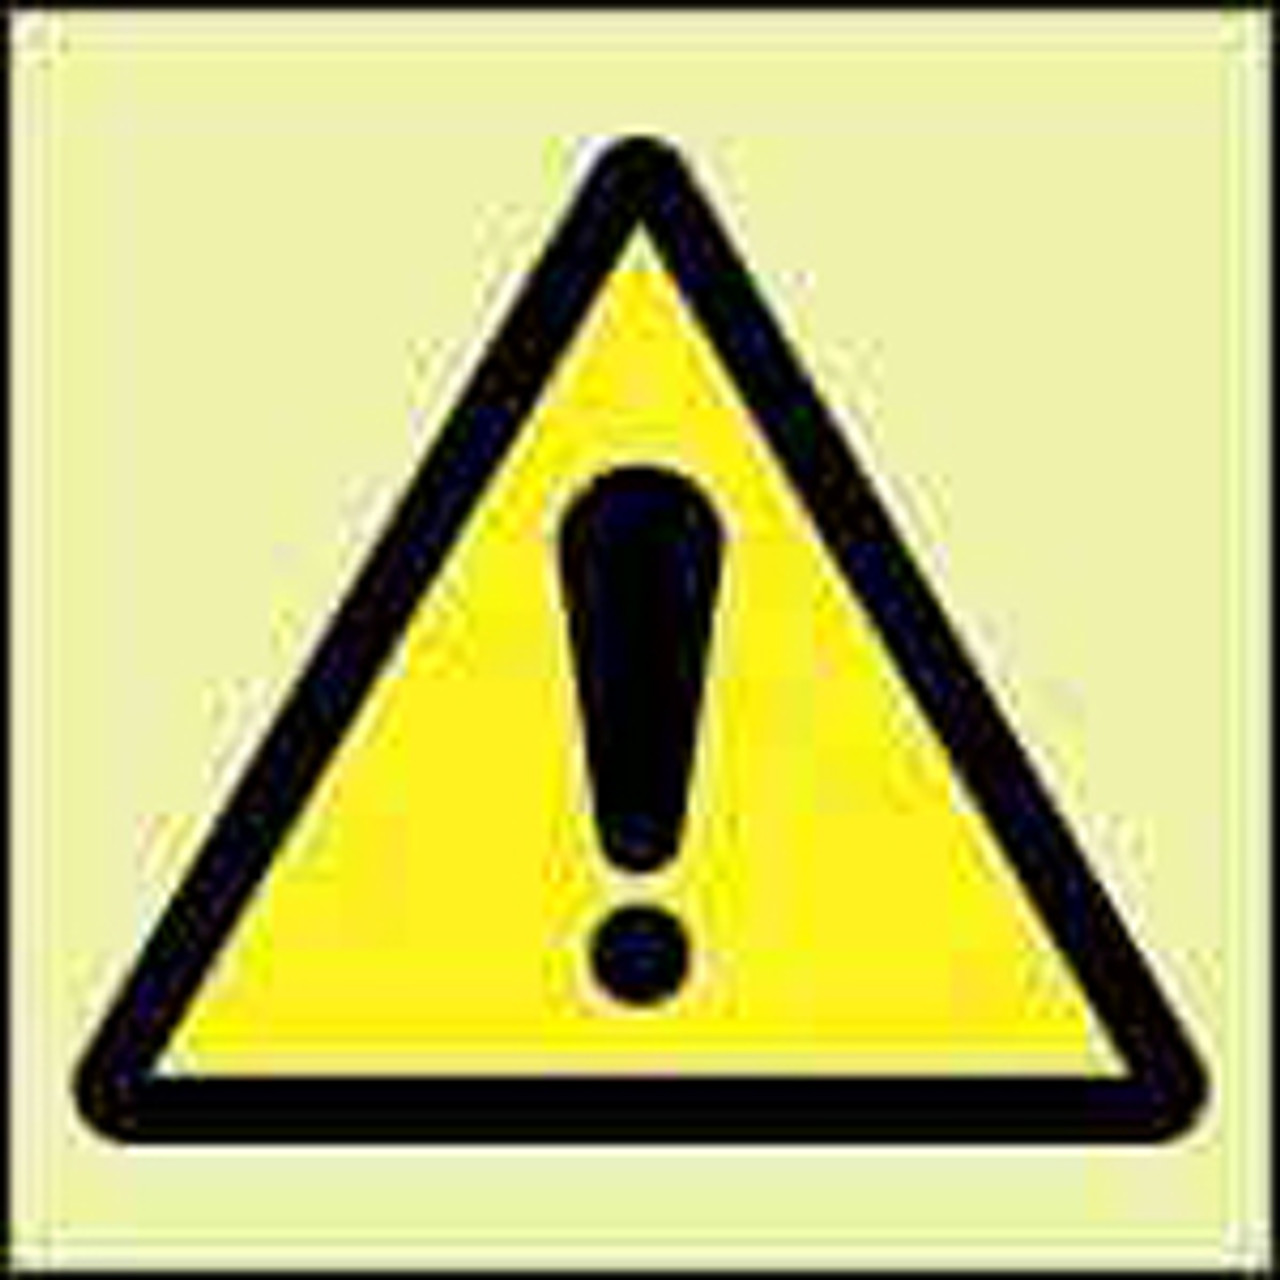 IMPA 337500 hazard sign - Danger